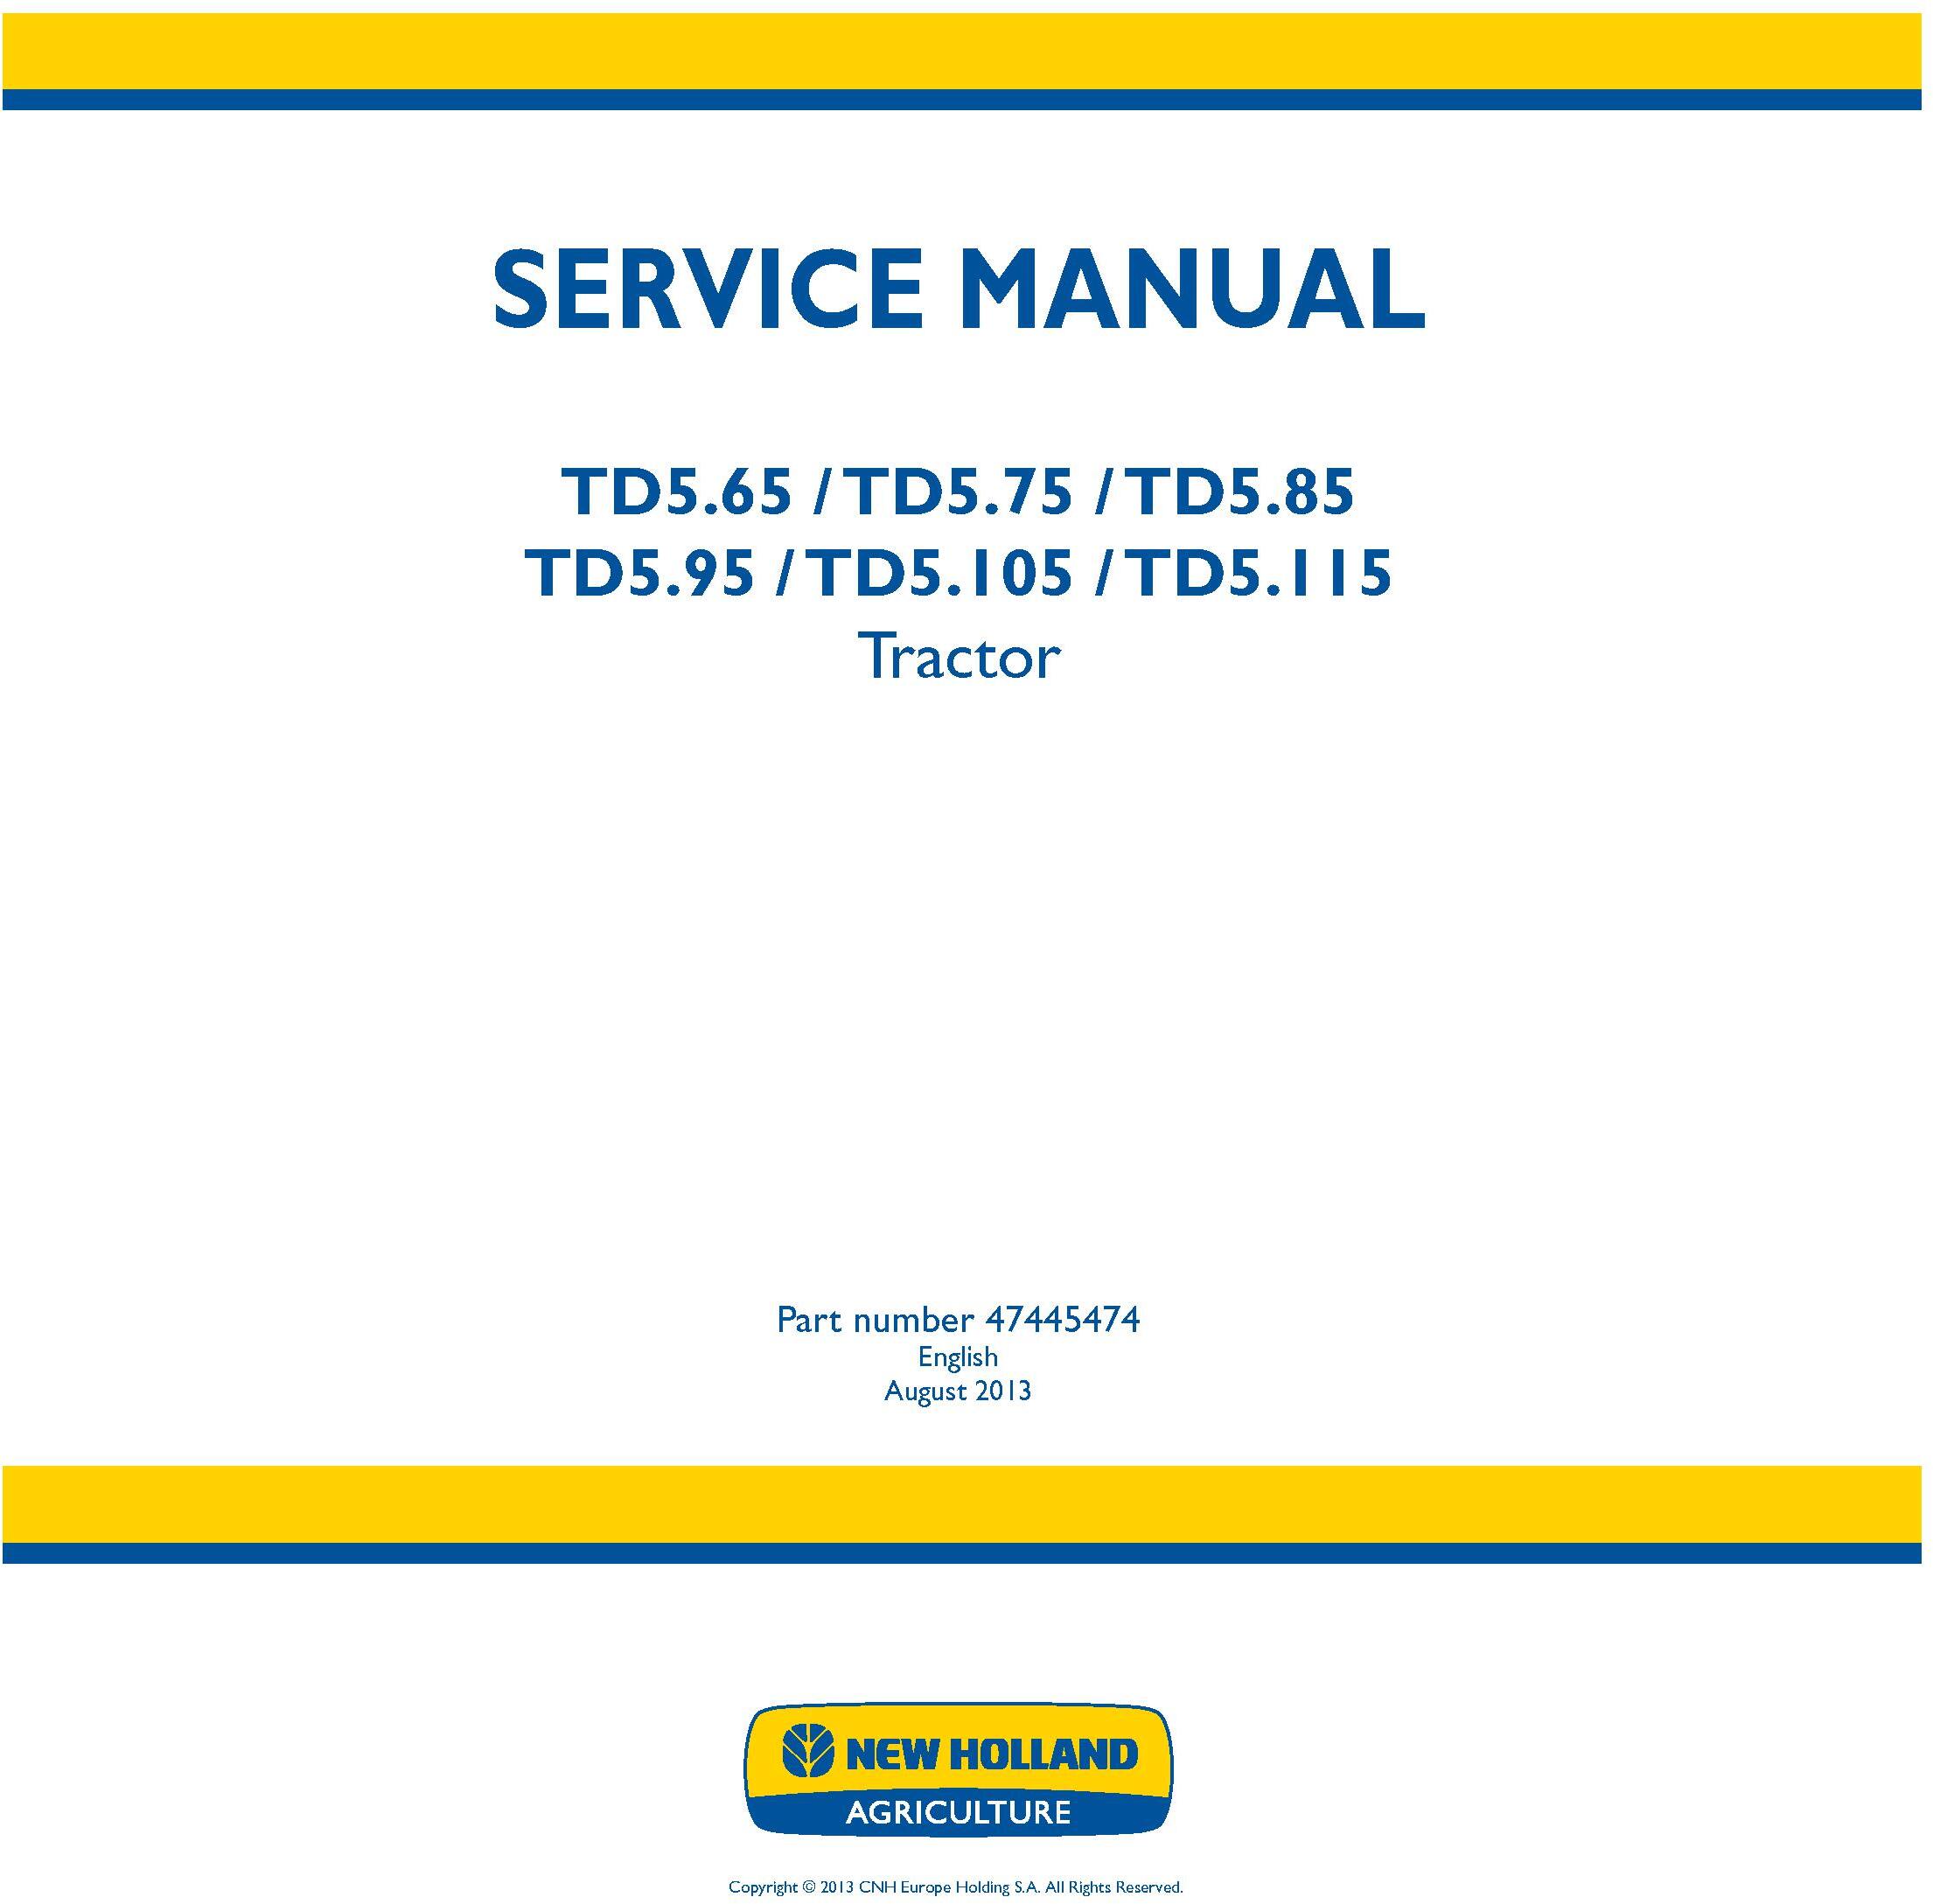 New Holland TD5.65, TD5.75, TD5.85, TD5.95, TD5.105, TD5.115 Tractor Service Manual - 19379